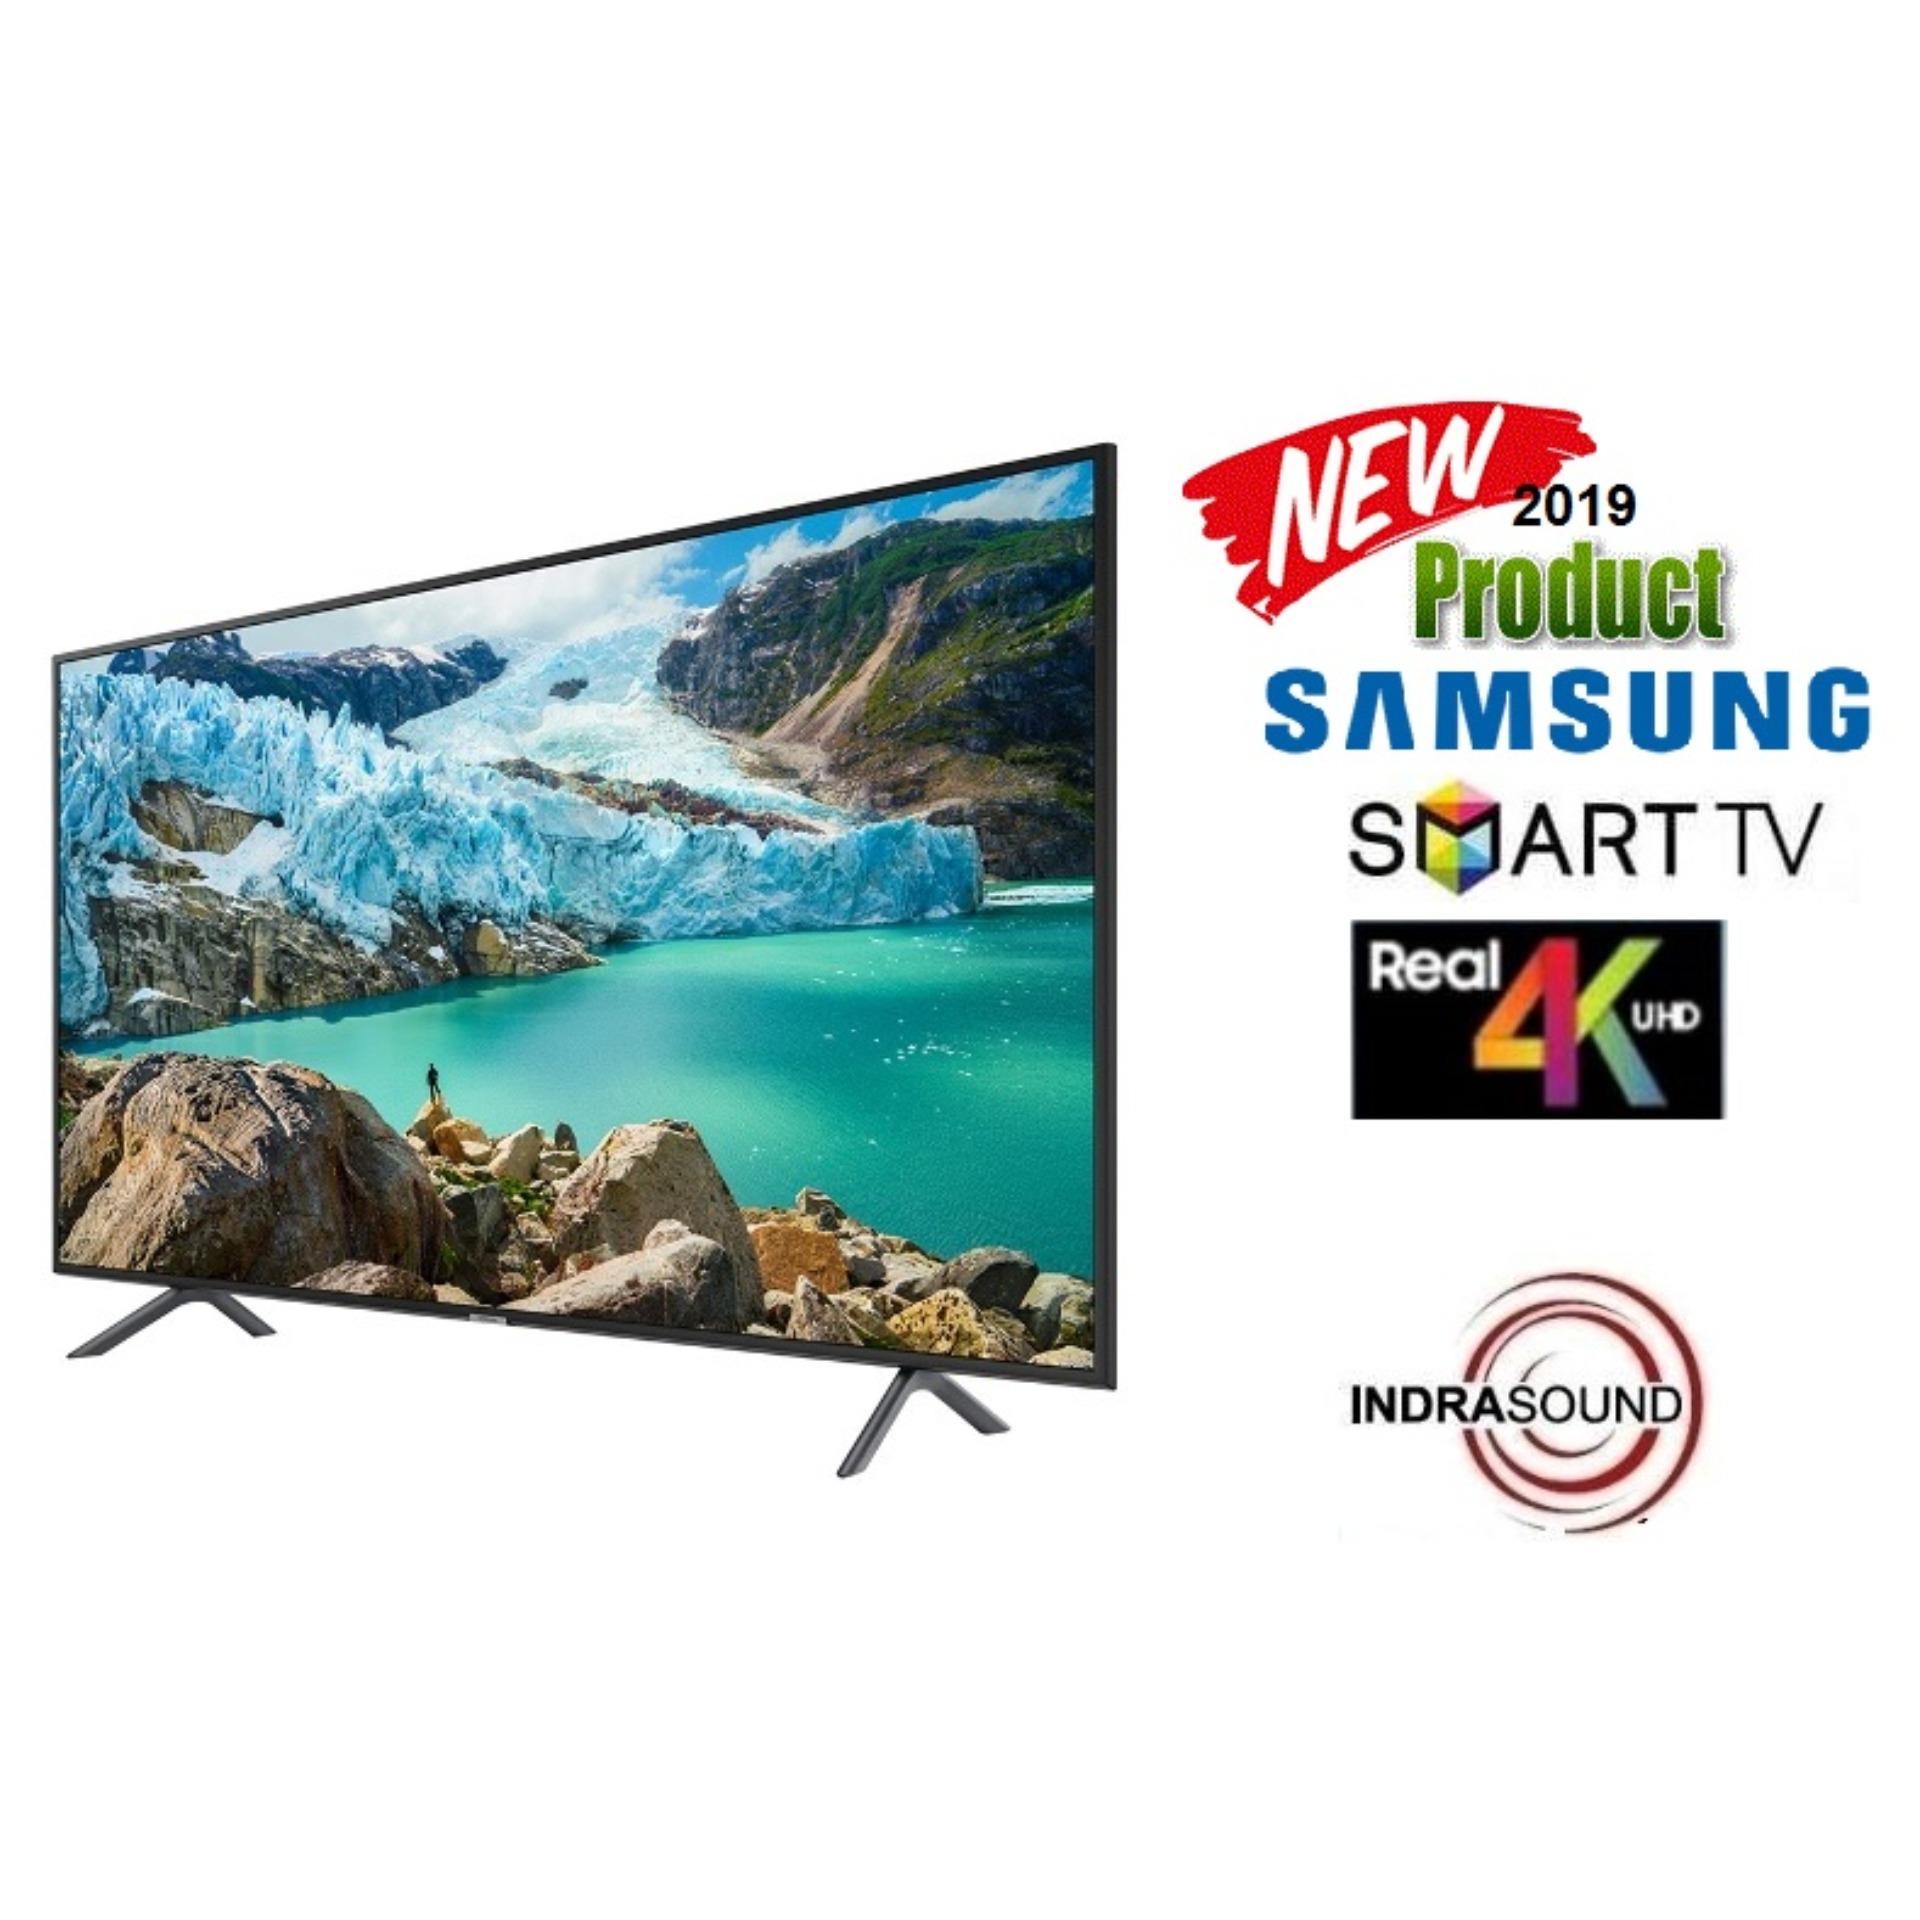 Samsung 4K UHD Flat Smart TV รุ่น UA55RU7100K 55 นิ้ว  สามารถใช้งานร่วมกับ Apple ได้ ด้วย app AirPlay 2 ( สินค้าใหม่แกะกล่อง)